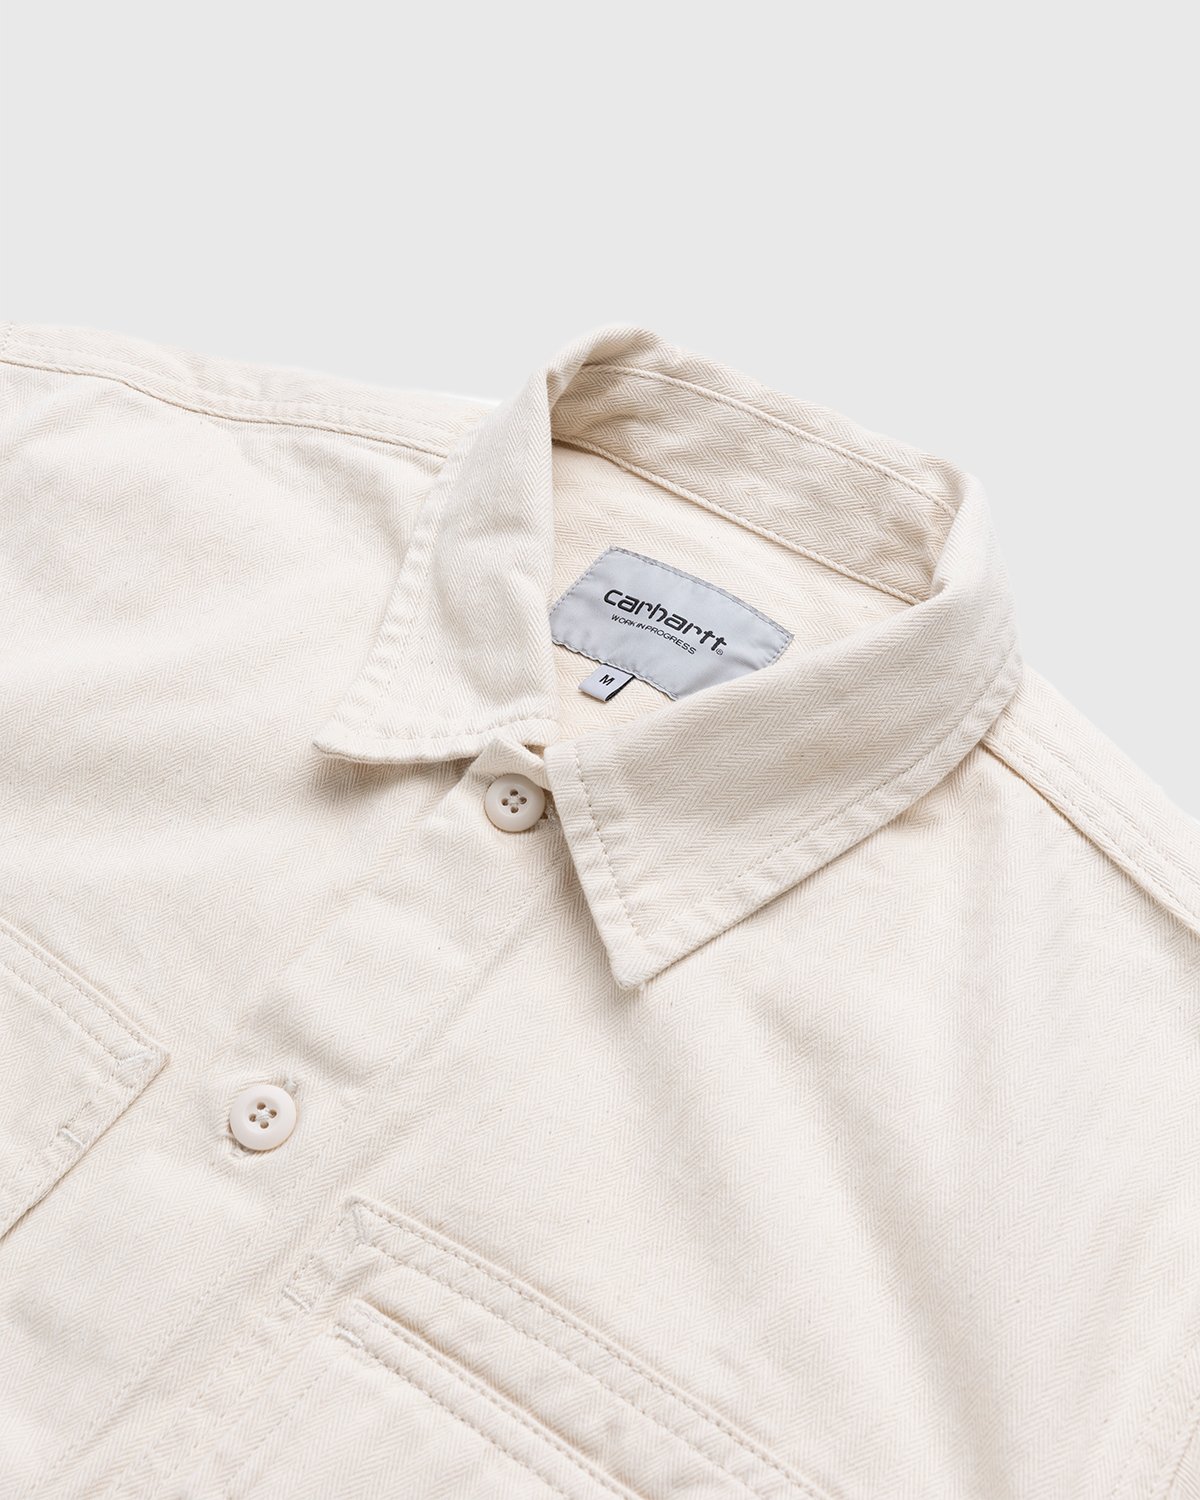 Carhartt WIP - Charter Shirt Natural - Clothing - Beige - Image 3